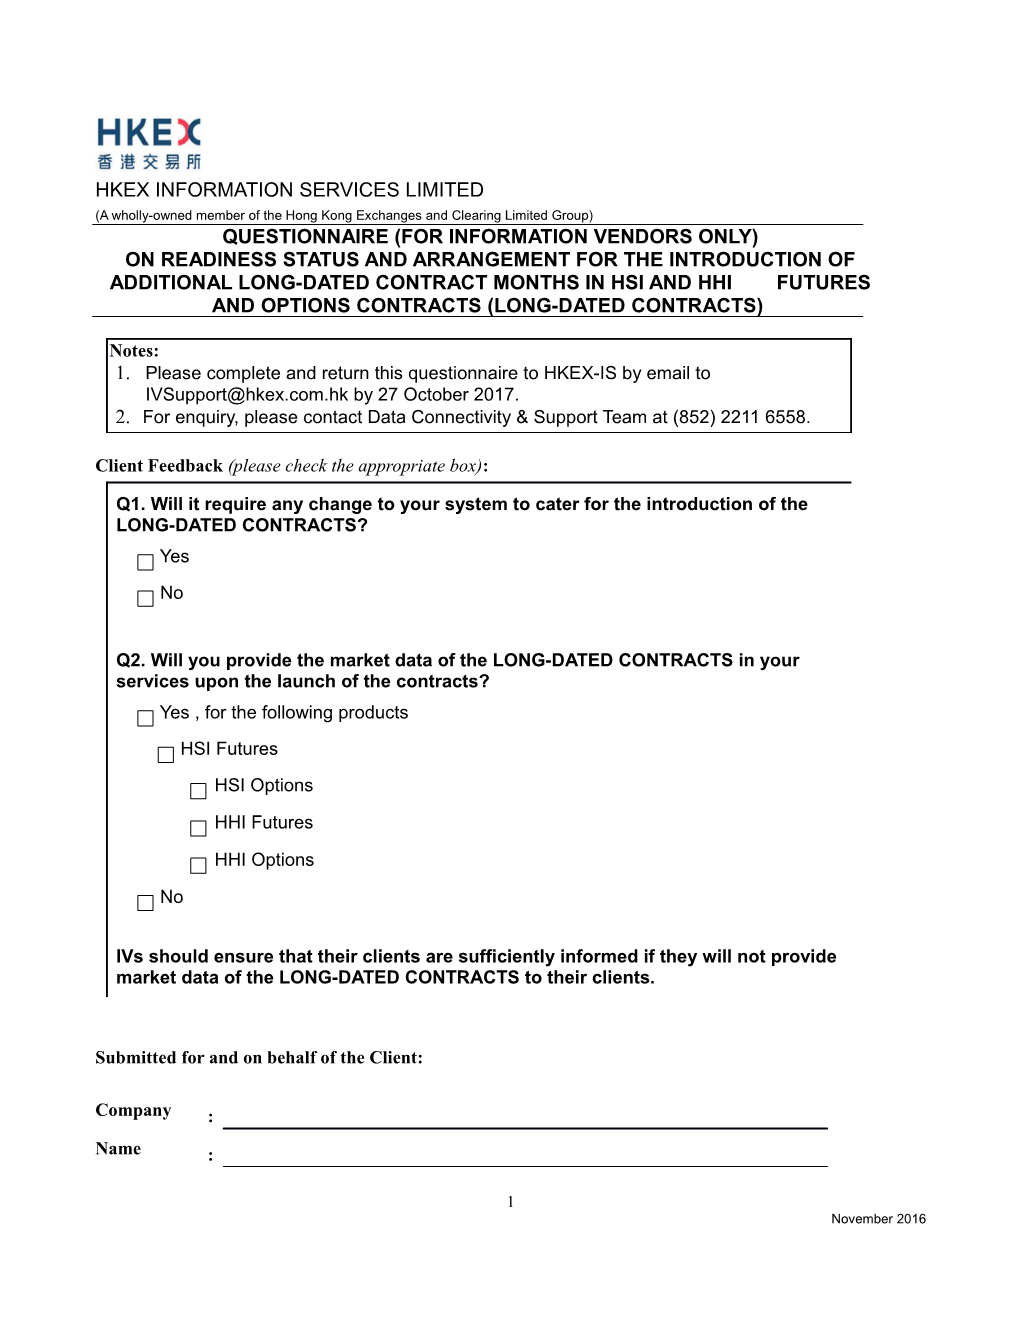 OMD-C Post Release Confirmation Form